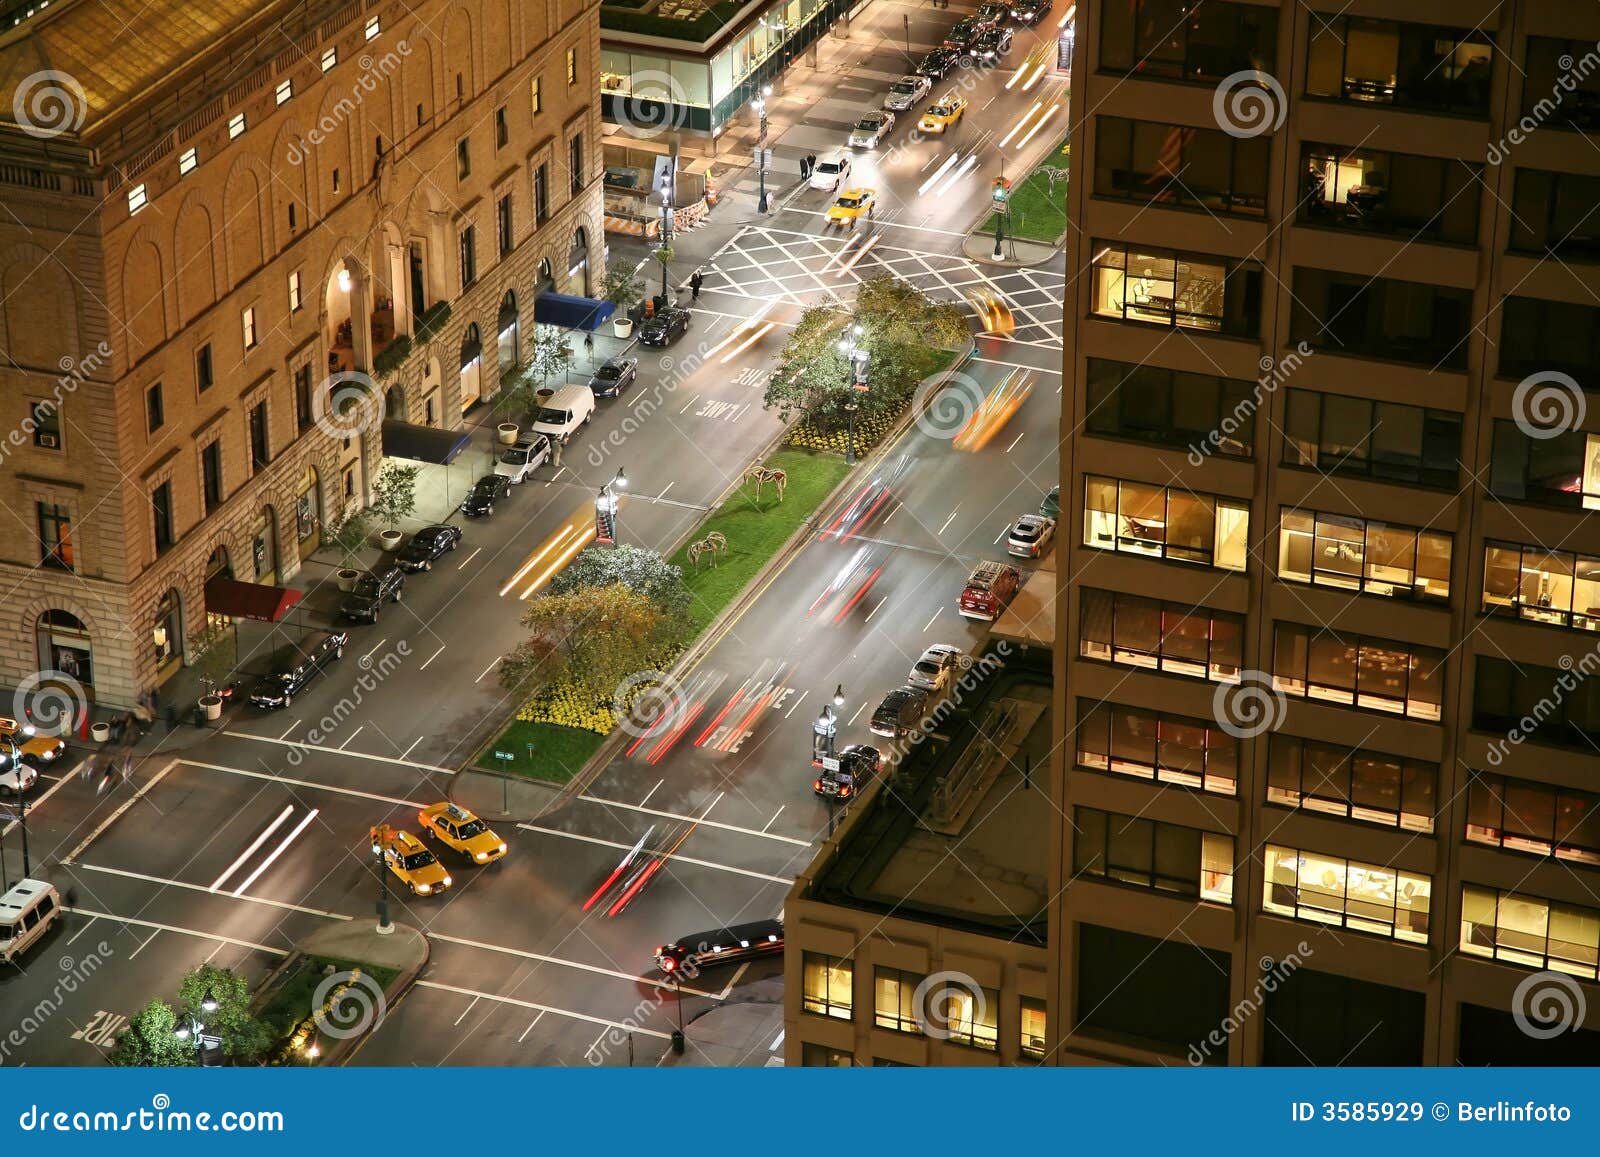 new york city streets at night